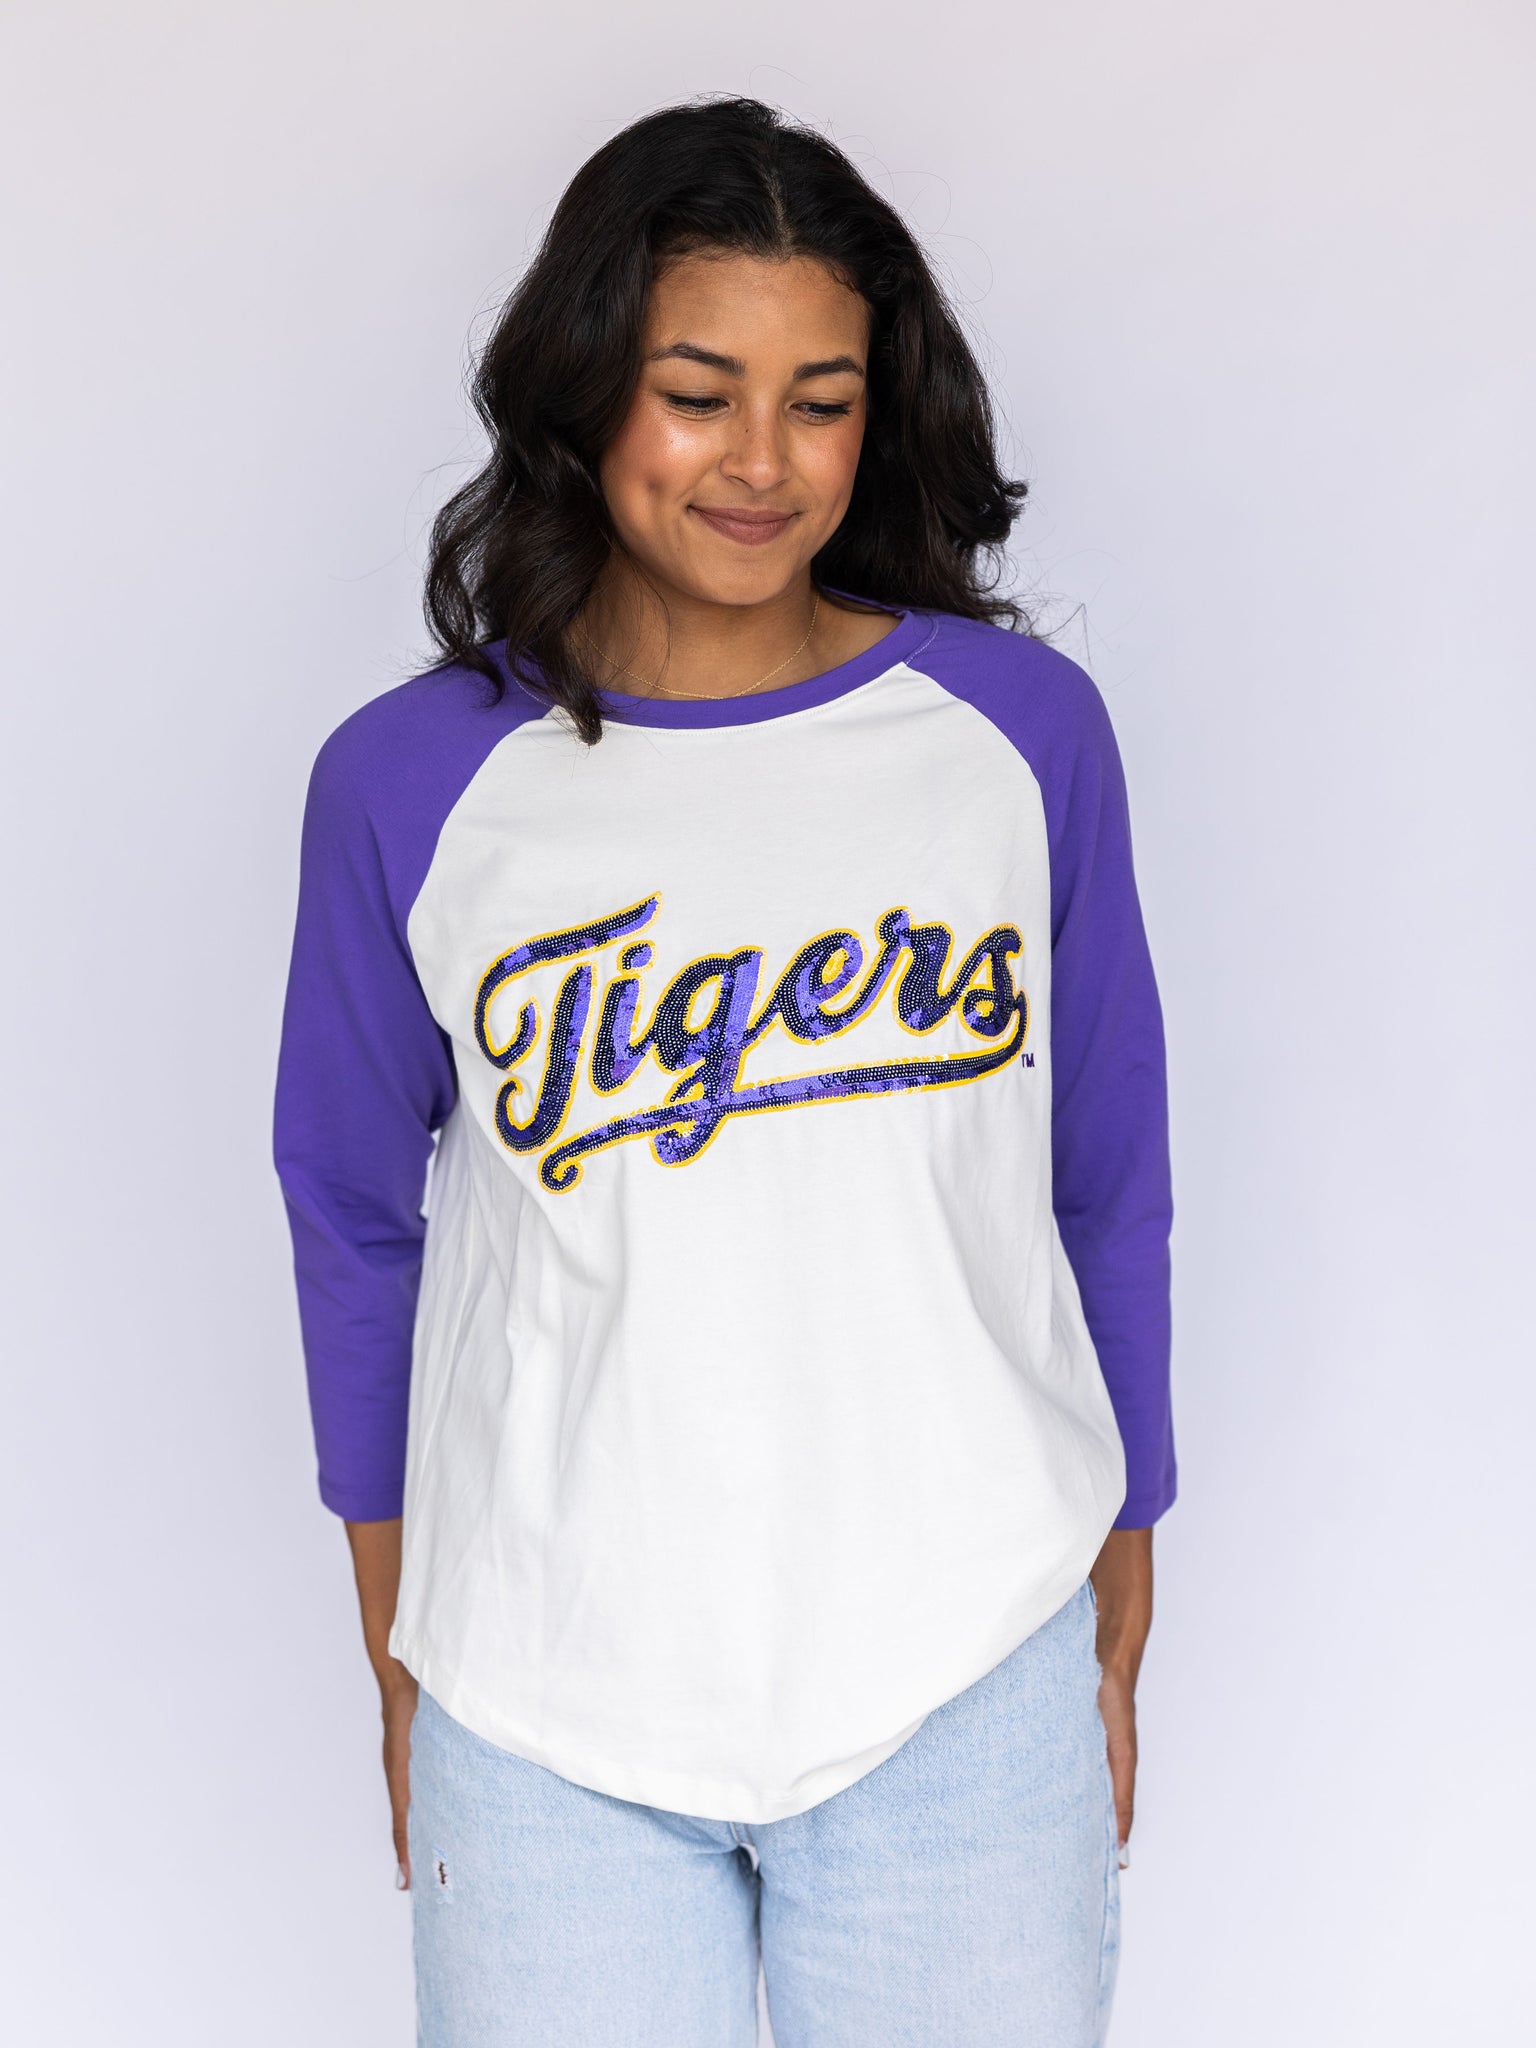 LSU Baseball Shirt Best Creative Tee Shirt Ever For Tiger Team In